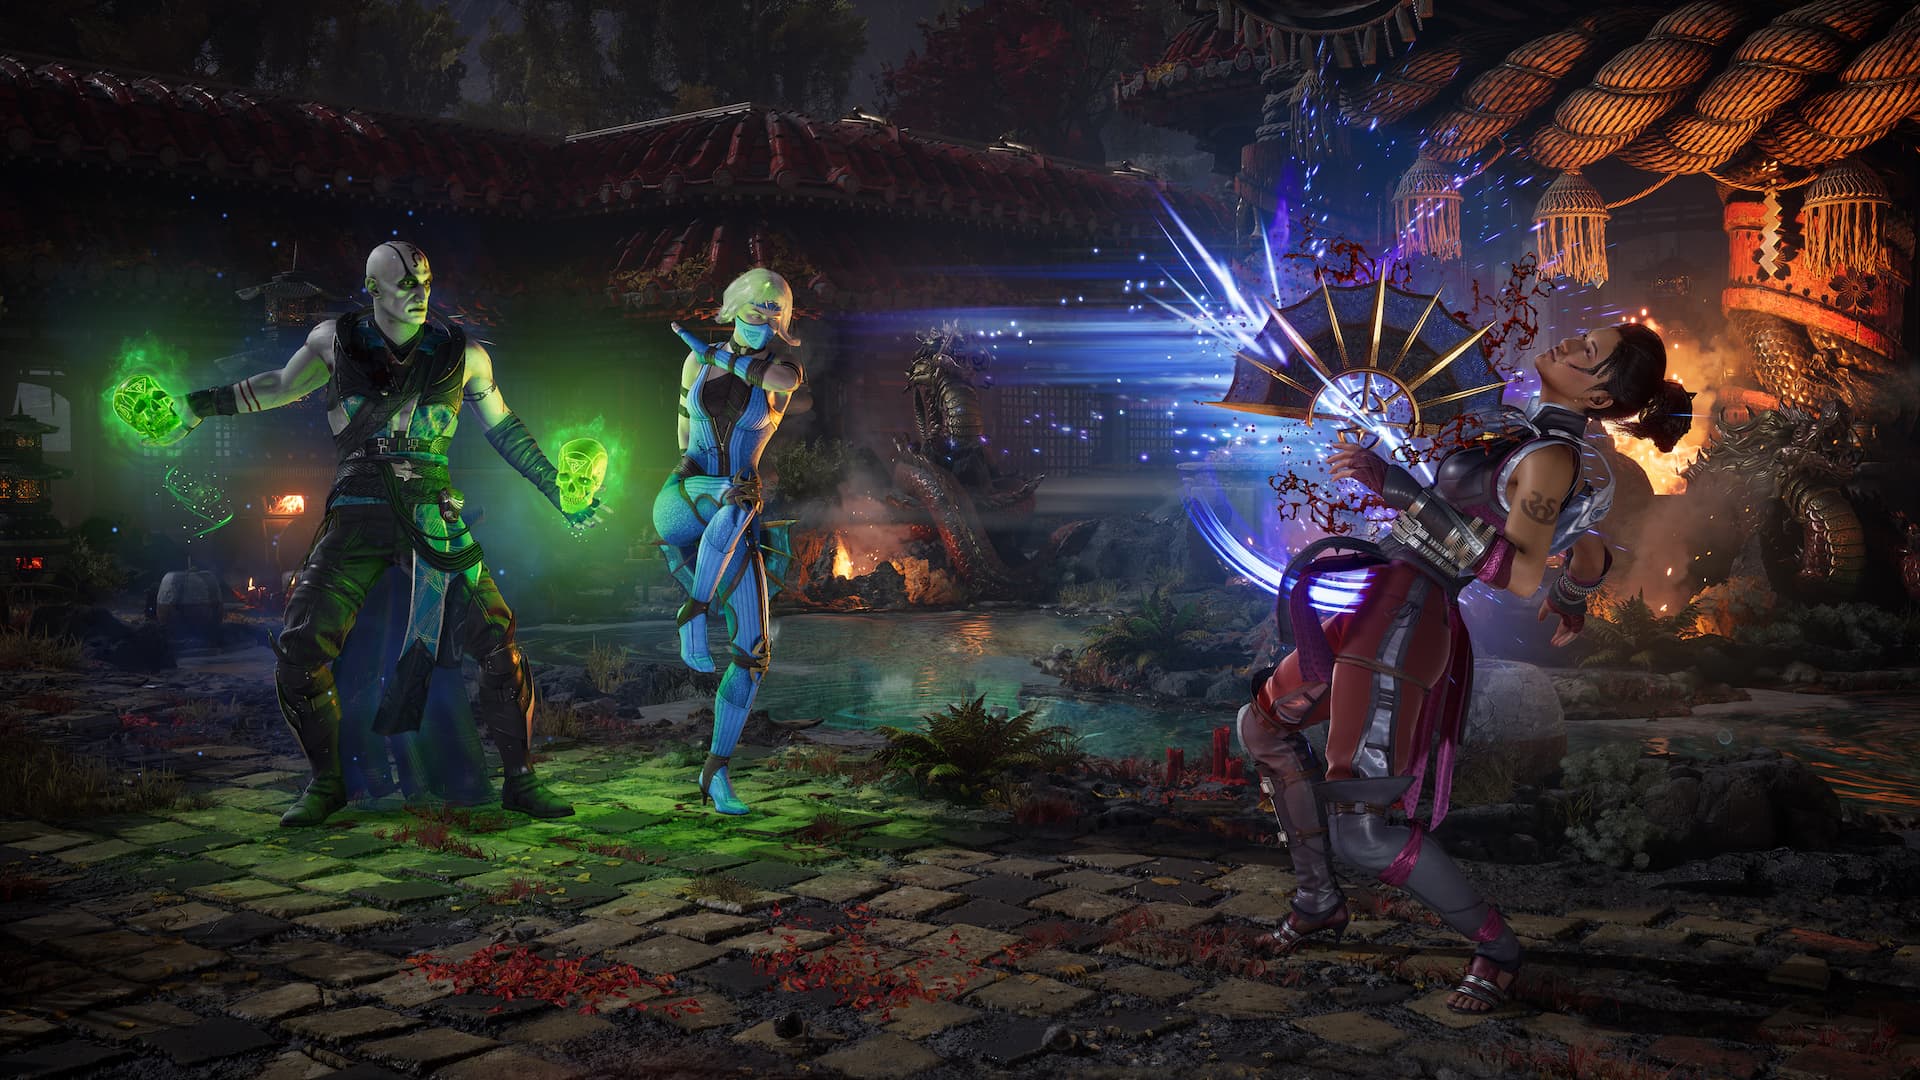 Mortal Kombat 1 Reveals Quan Chi Gameplay and Release Date